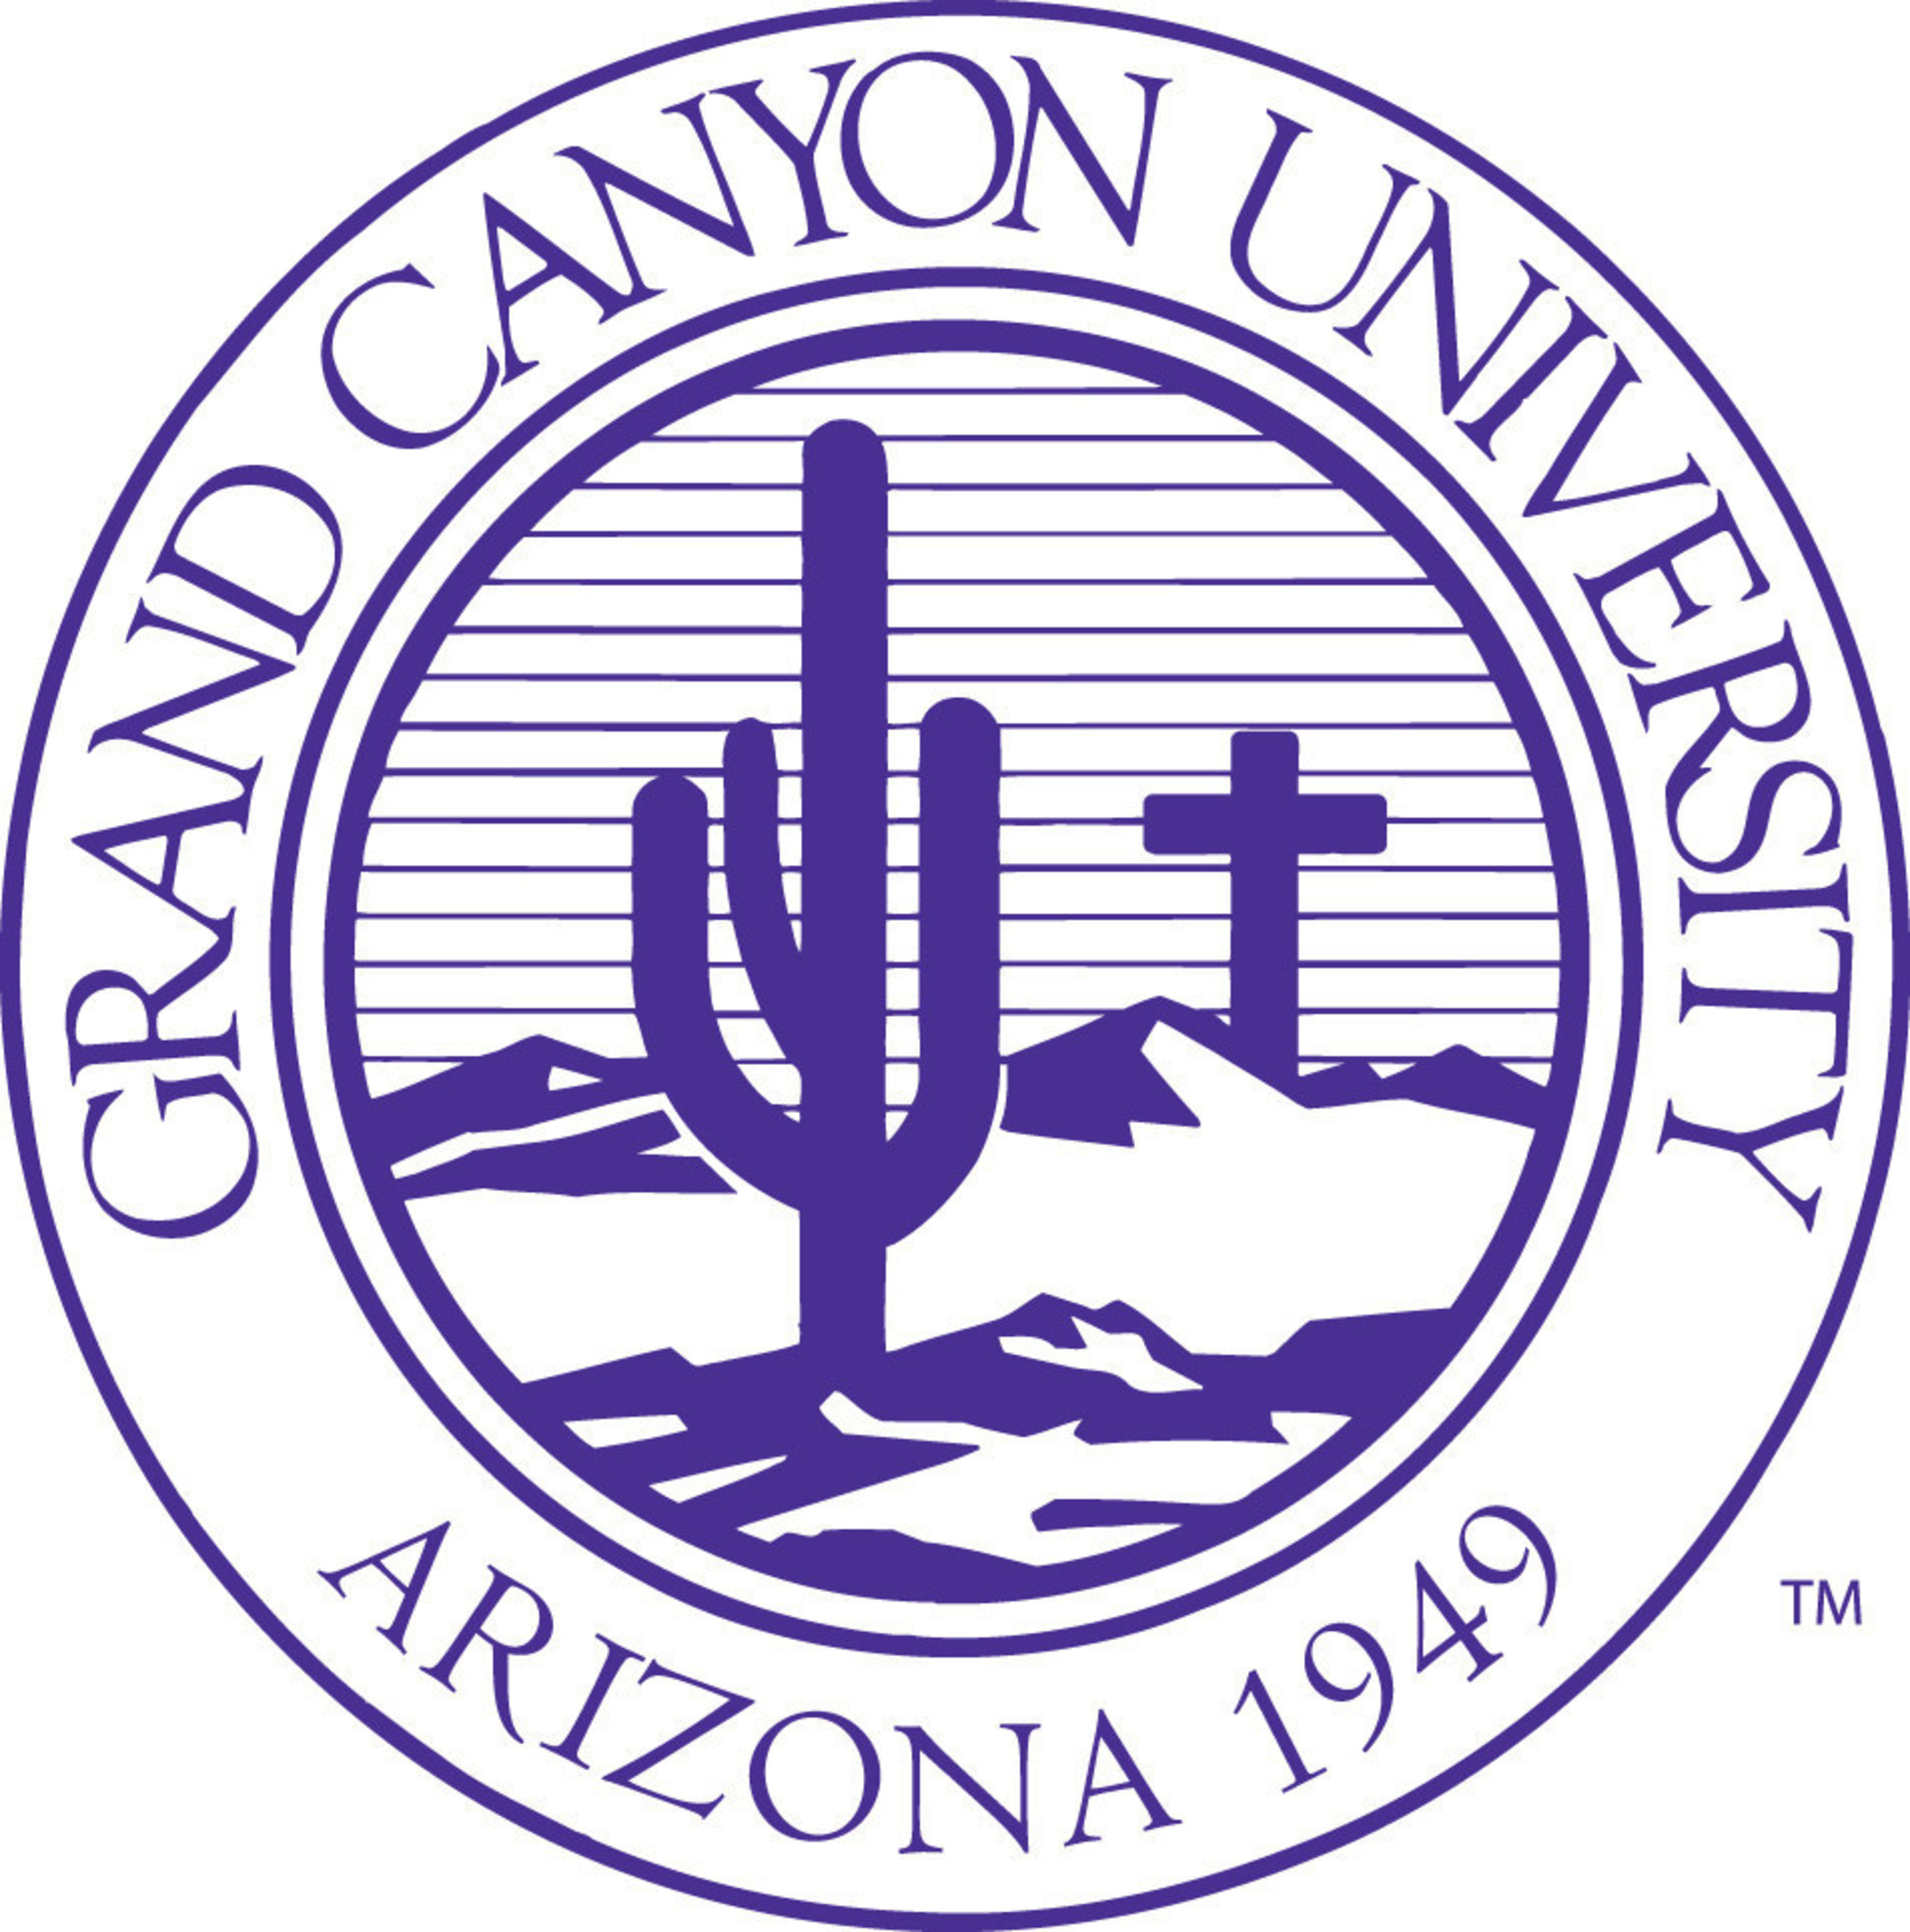 Grand Canyon University (PRNewsFoto/Grand Canyon Education, Inc.)